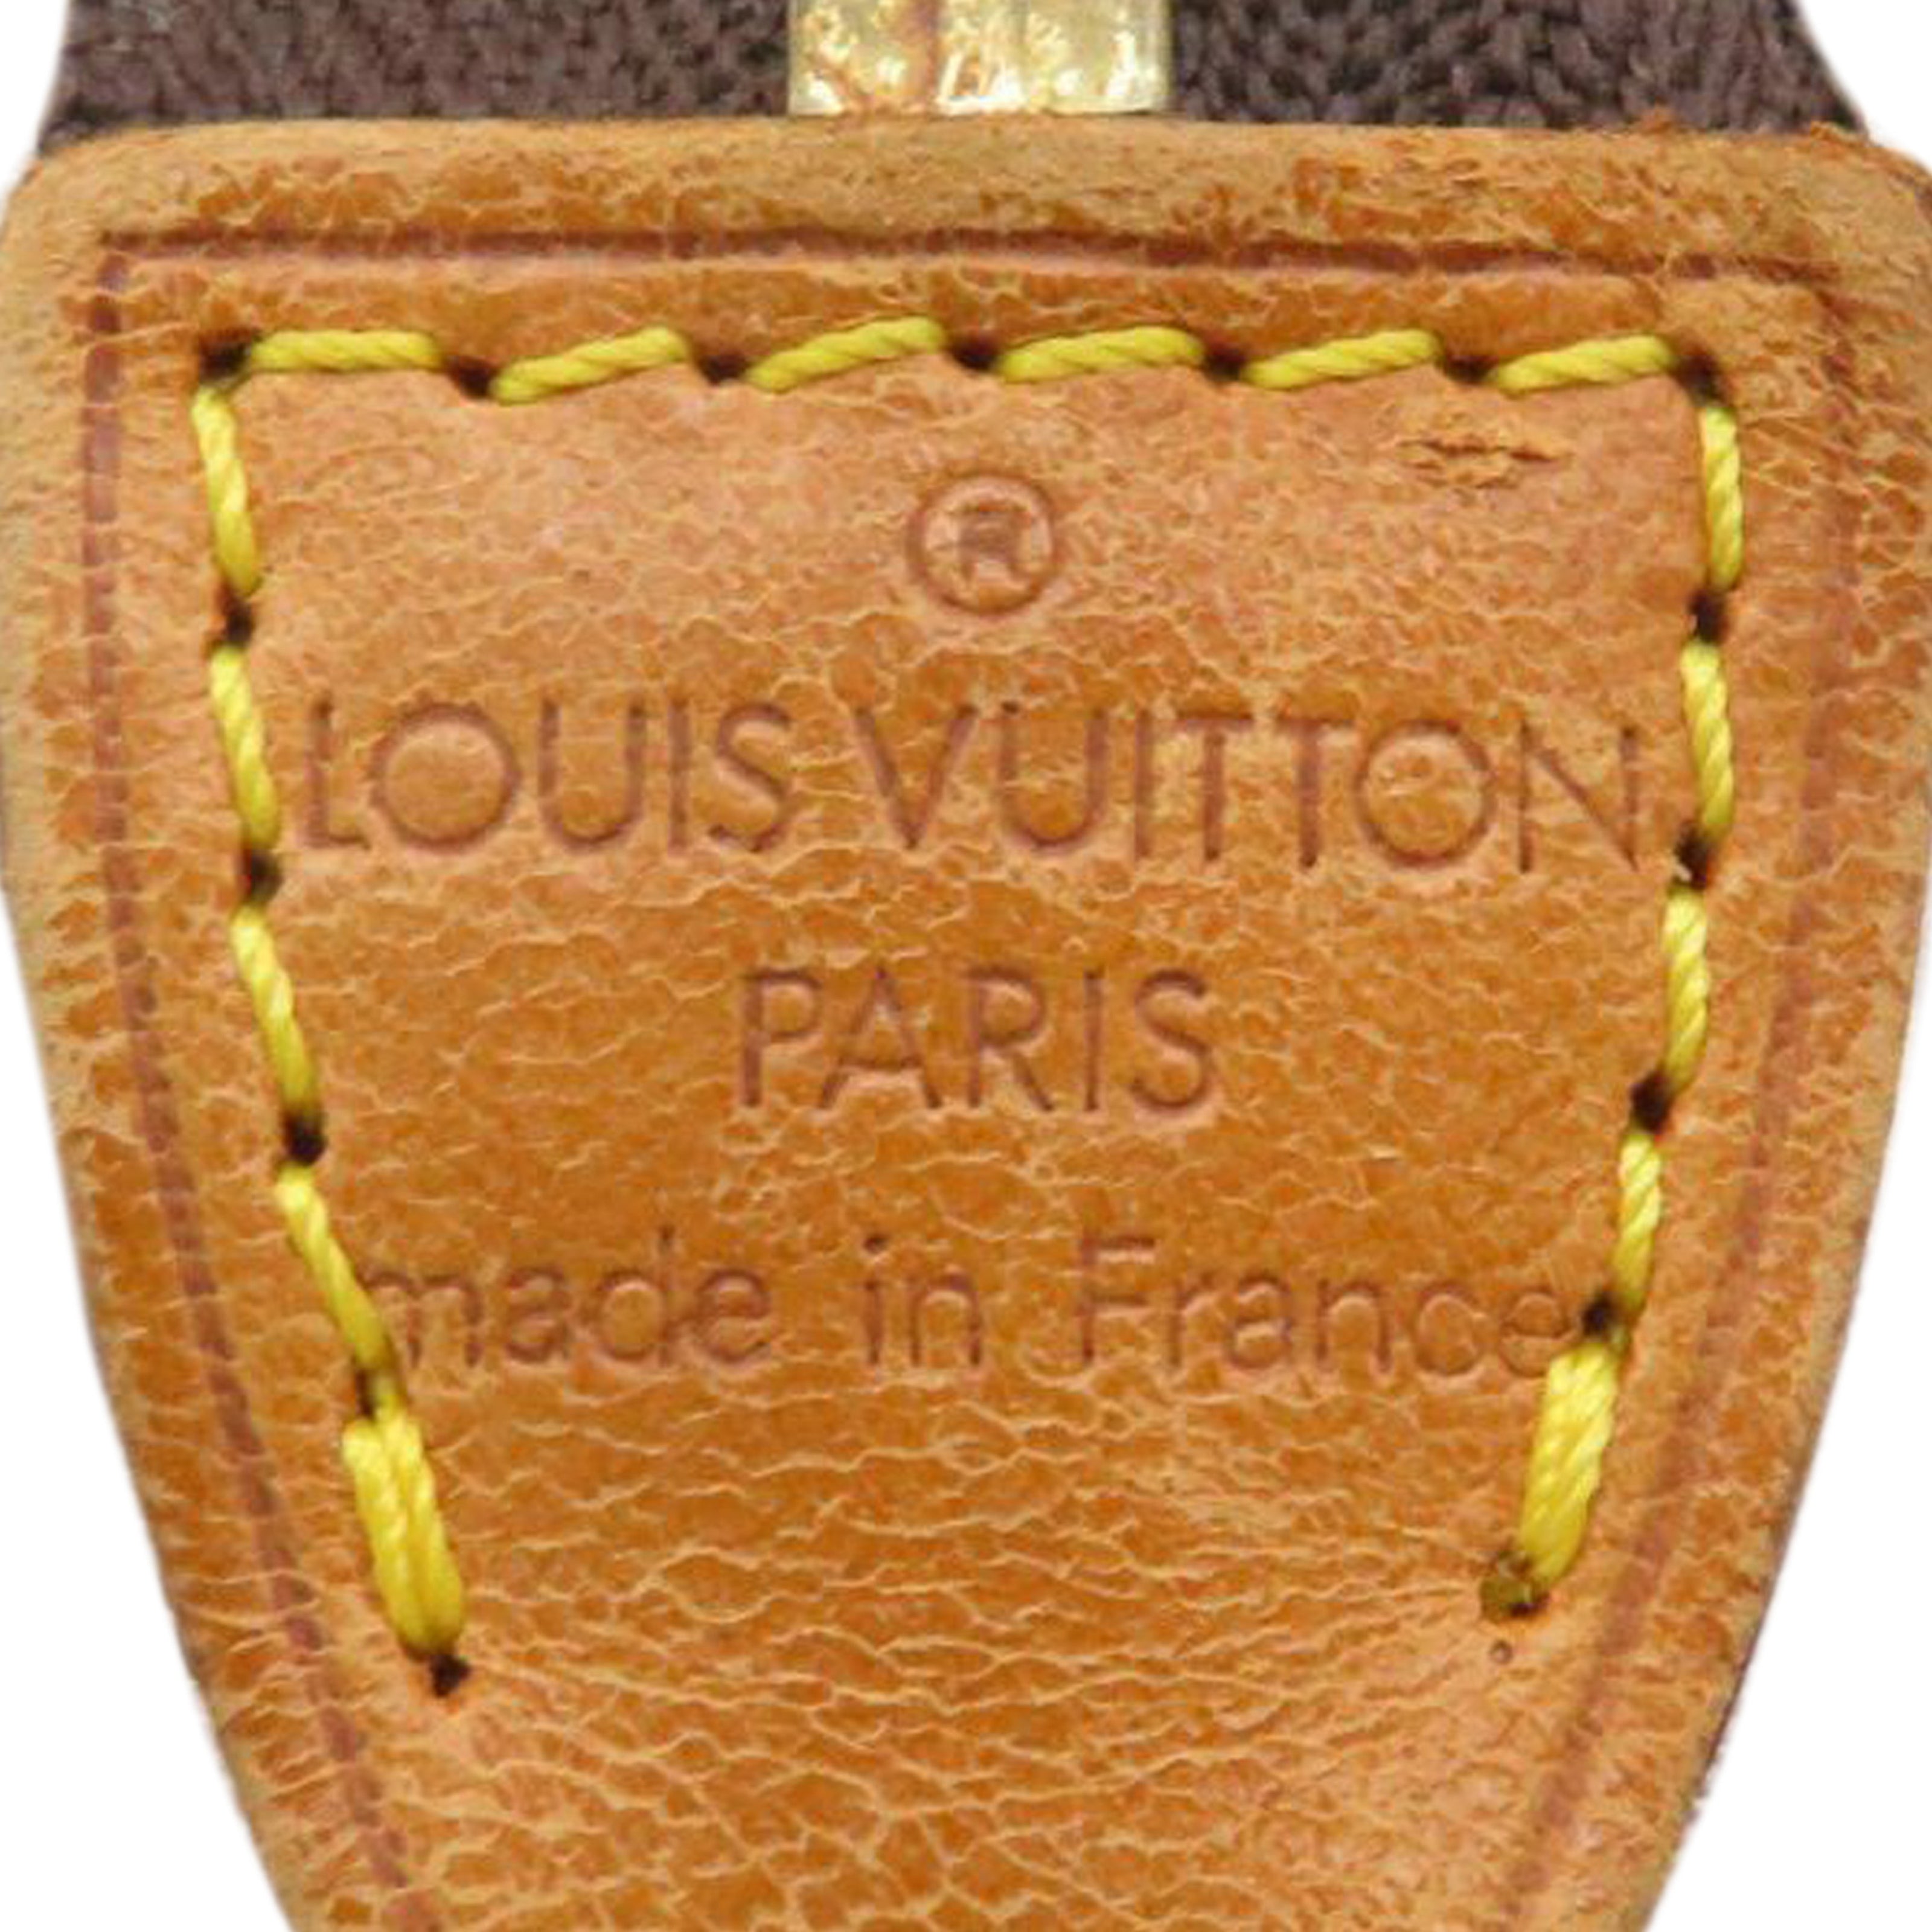 Louis Vuitton Stephen Sprouse Limited Edition Graffiti Pochette Bag